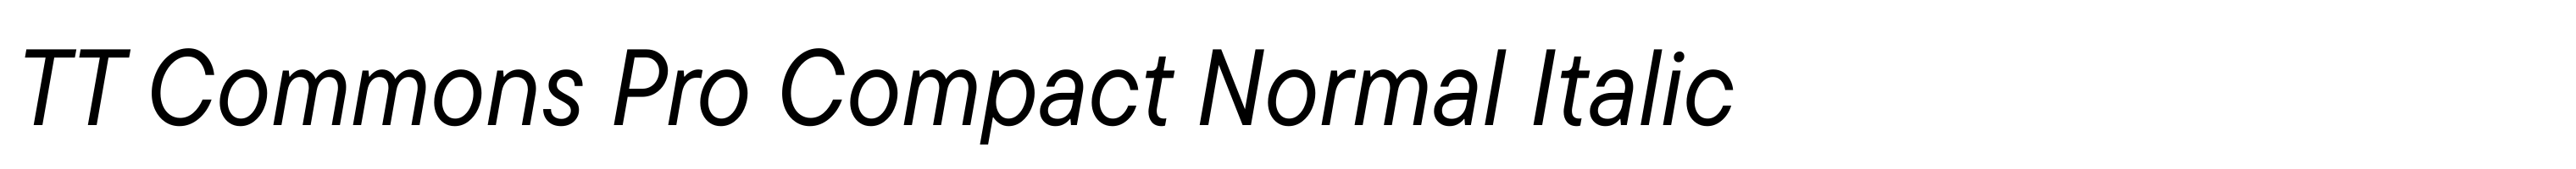 TT Commons Pro Compact Normal Italic